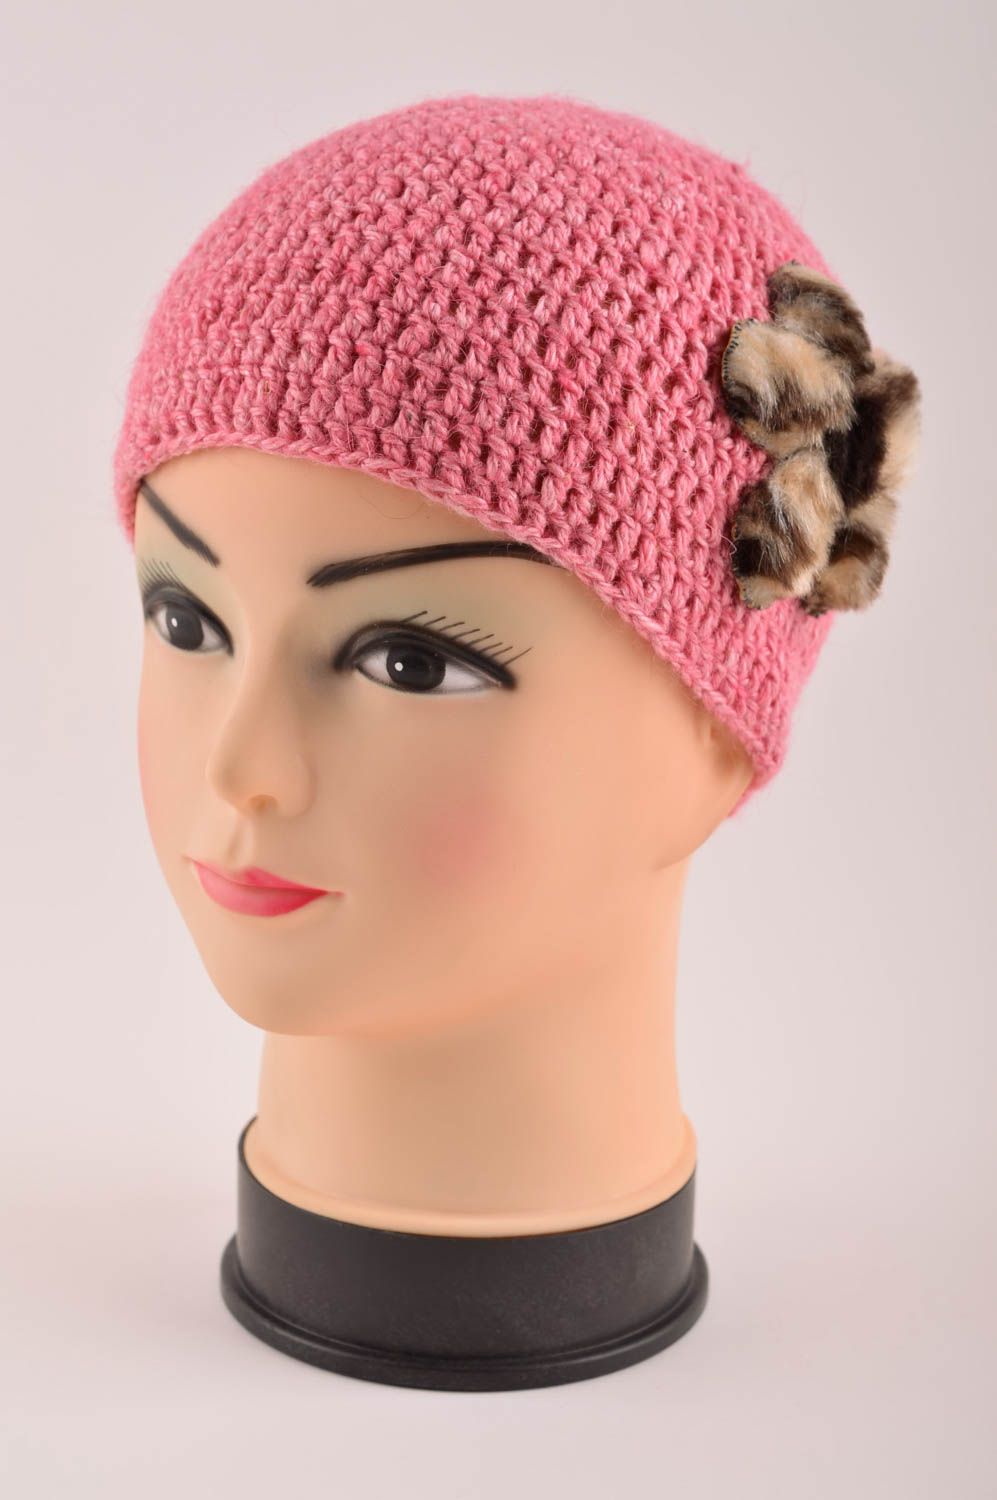 Handmade warm hat designer hat for baby unusual funny hat crocheted hat photo 2